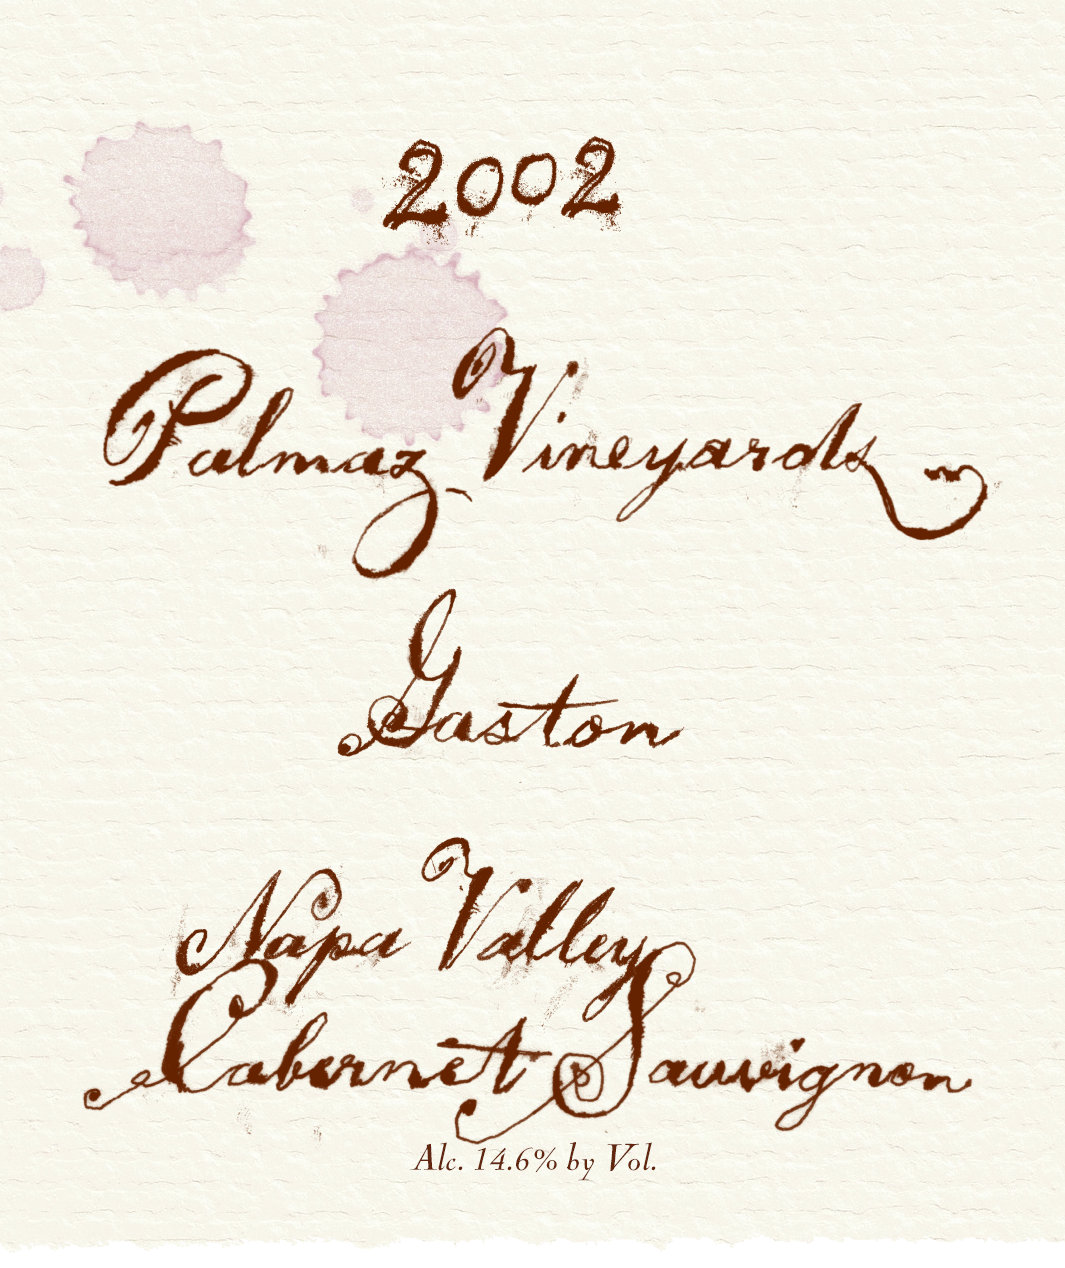 2002 Label